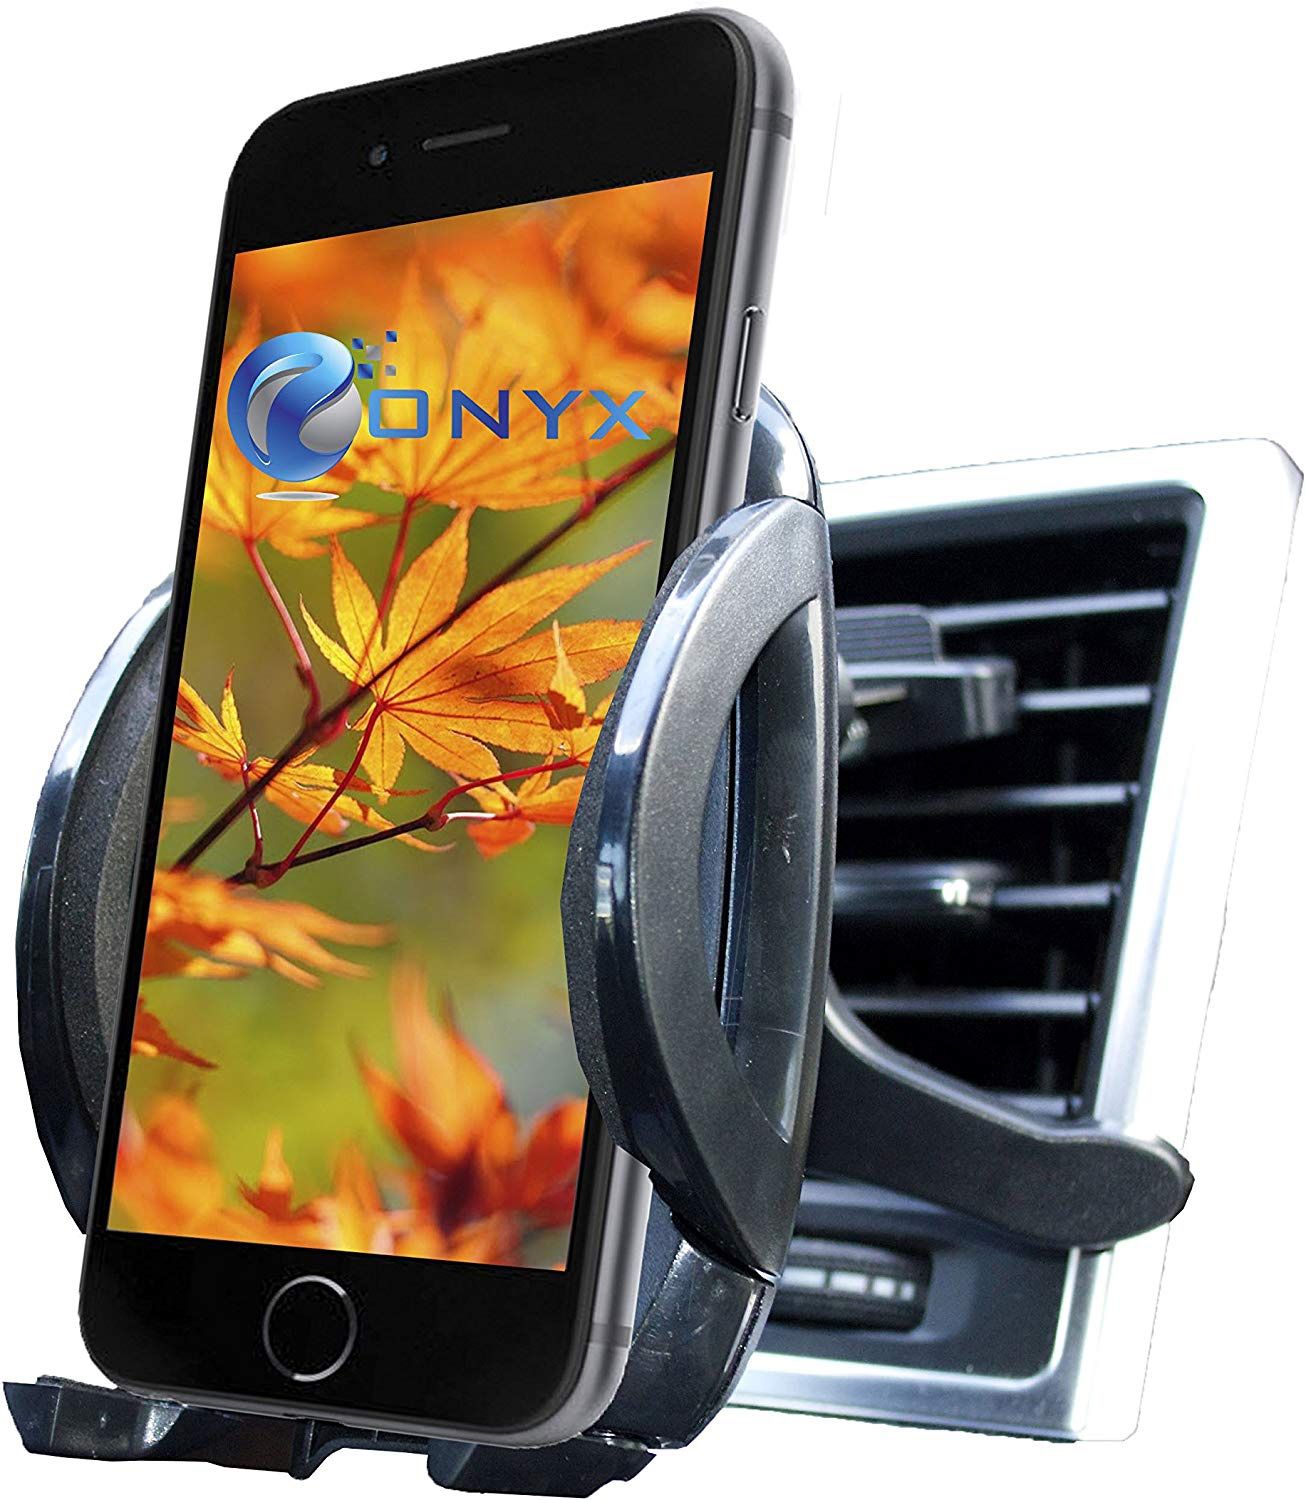 Air Vent Car Mount Adjustable Holder Cradle for Smartphone unto 4.0" Wide - Onyx